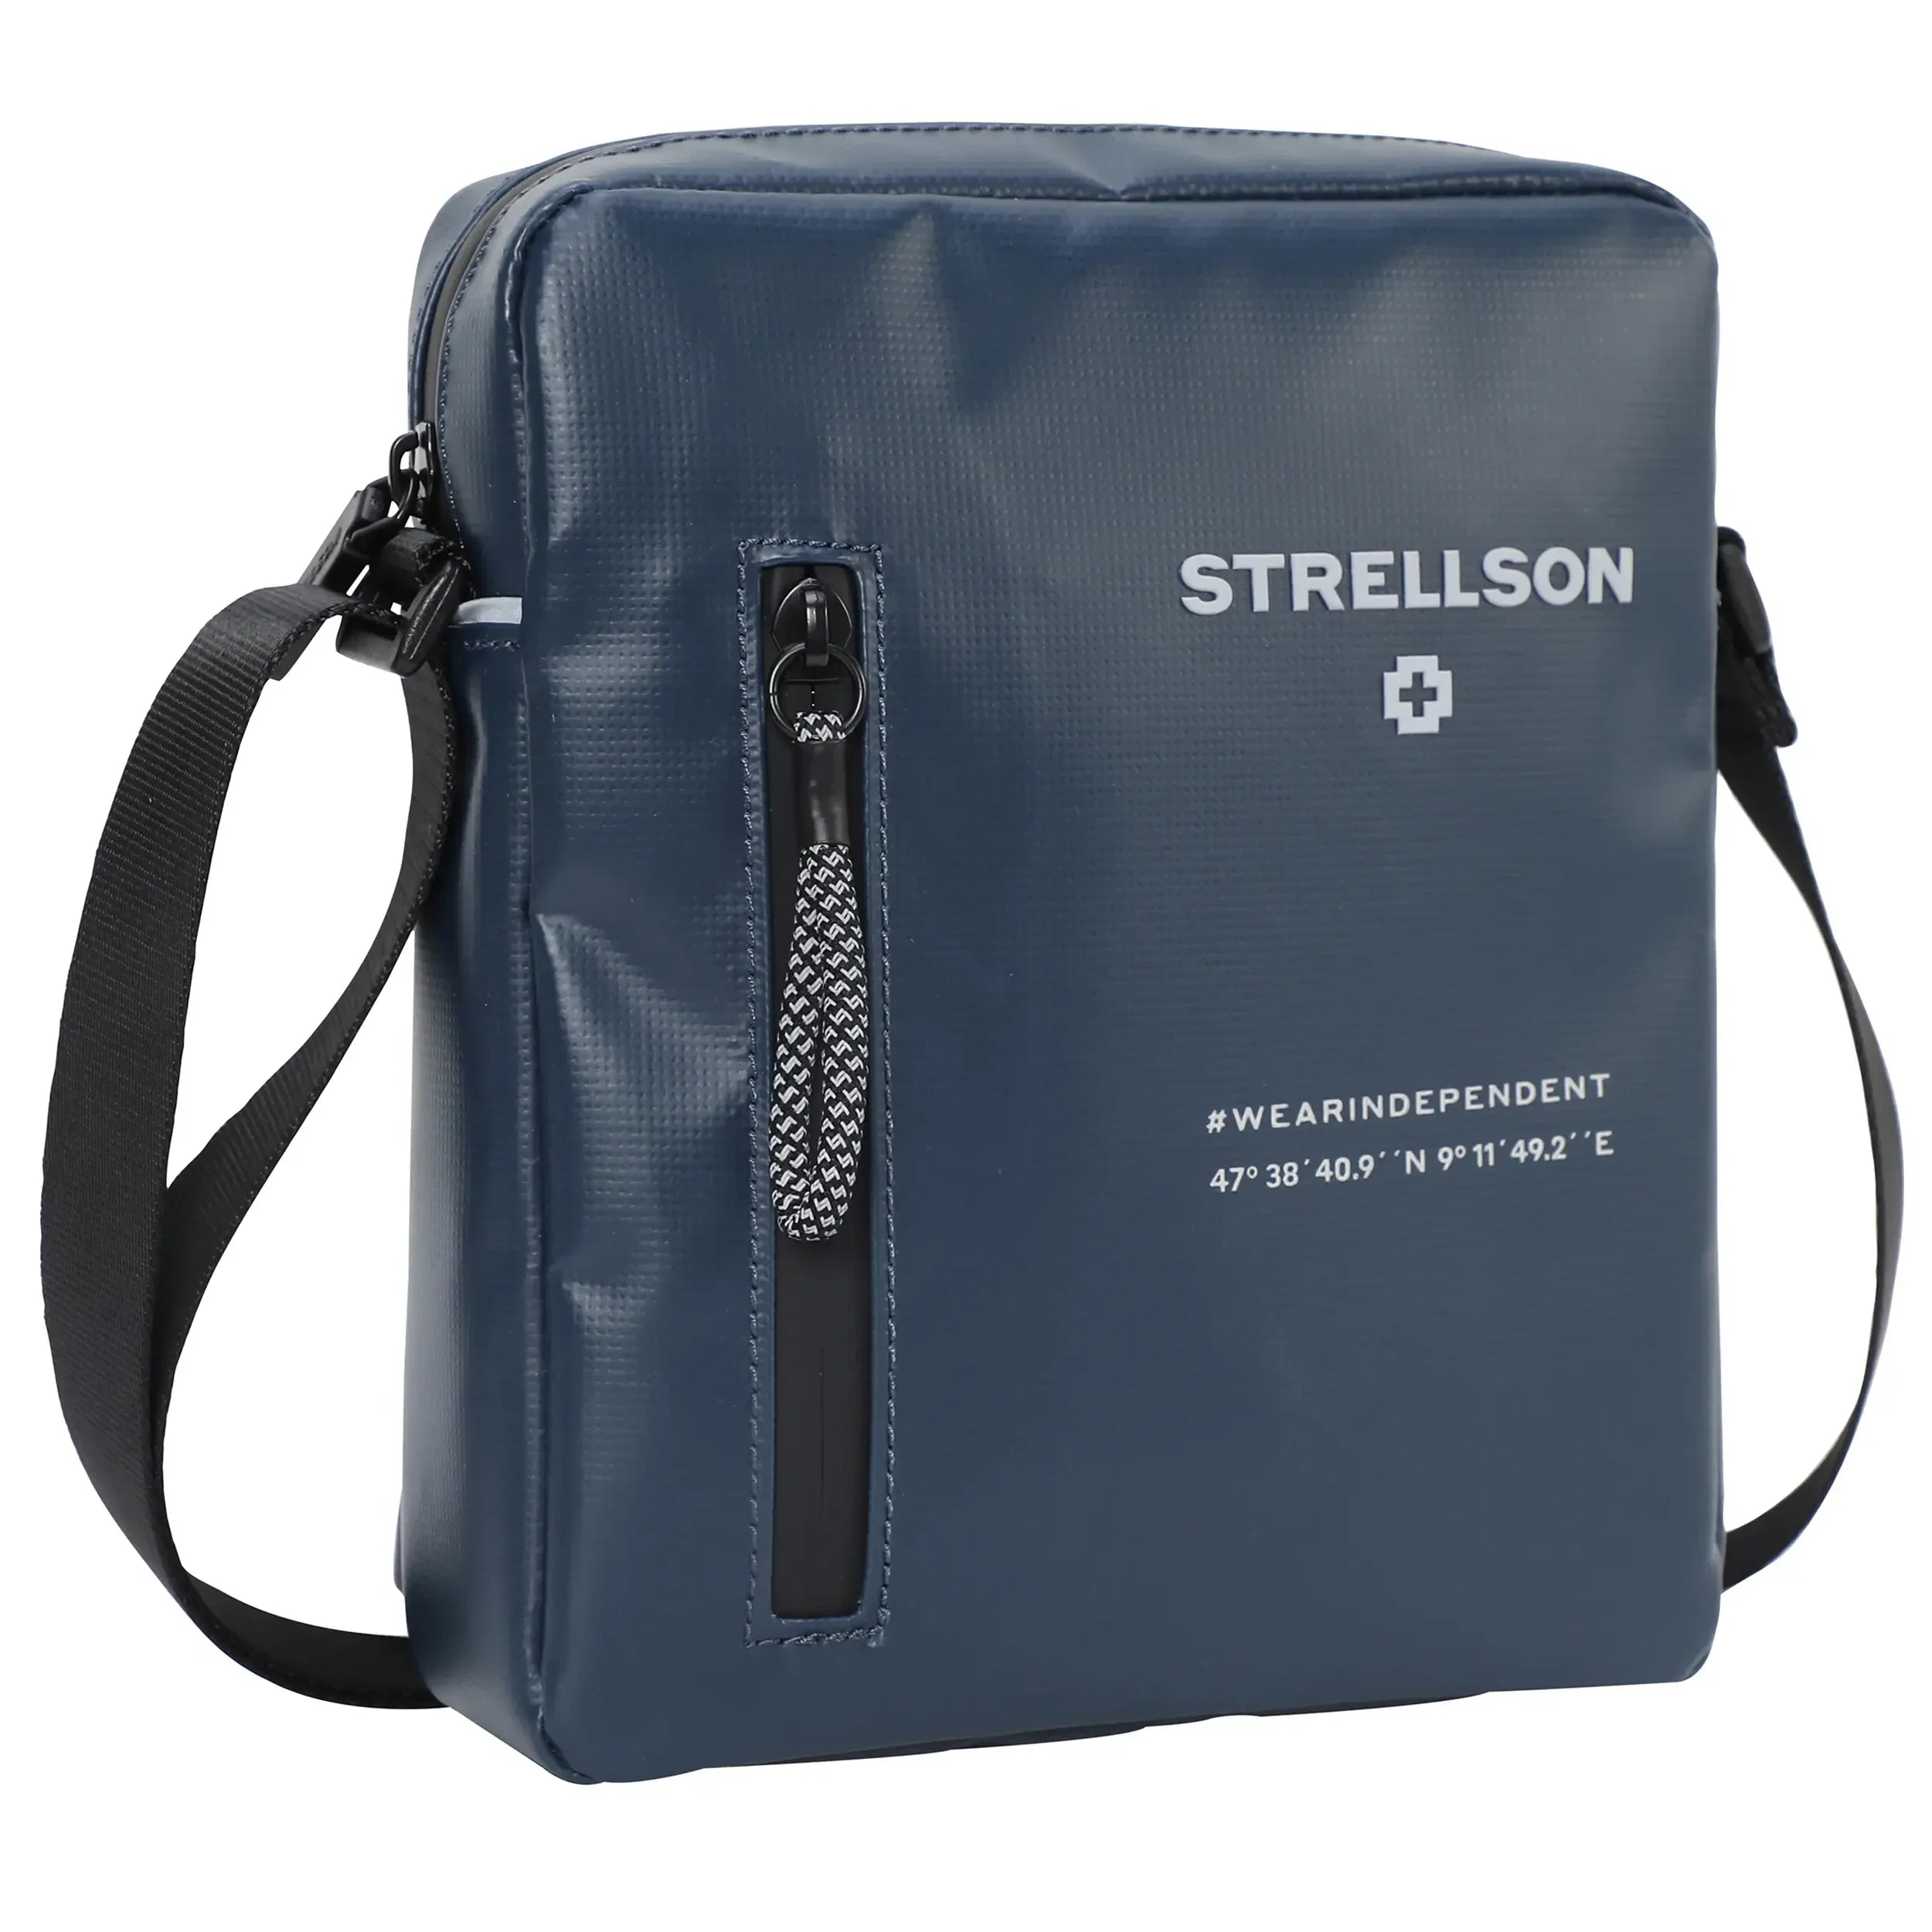 Strellson Stockwell 2.0 Marcus Shoulderbag XSVZ 21 cm - Darkblue